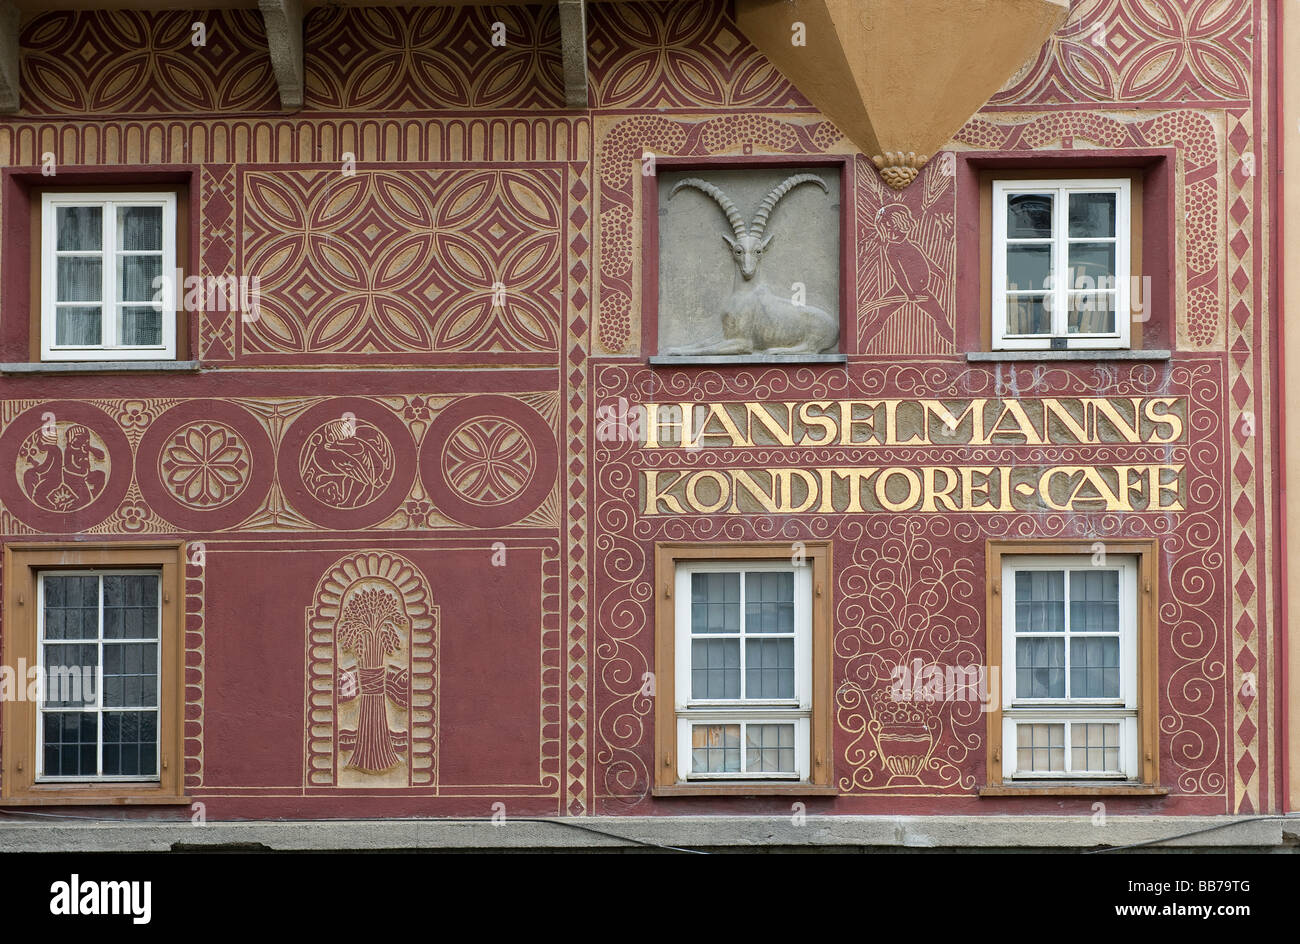 ornate cafe sign on building, st moritz, switzerland Stock Photo